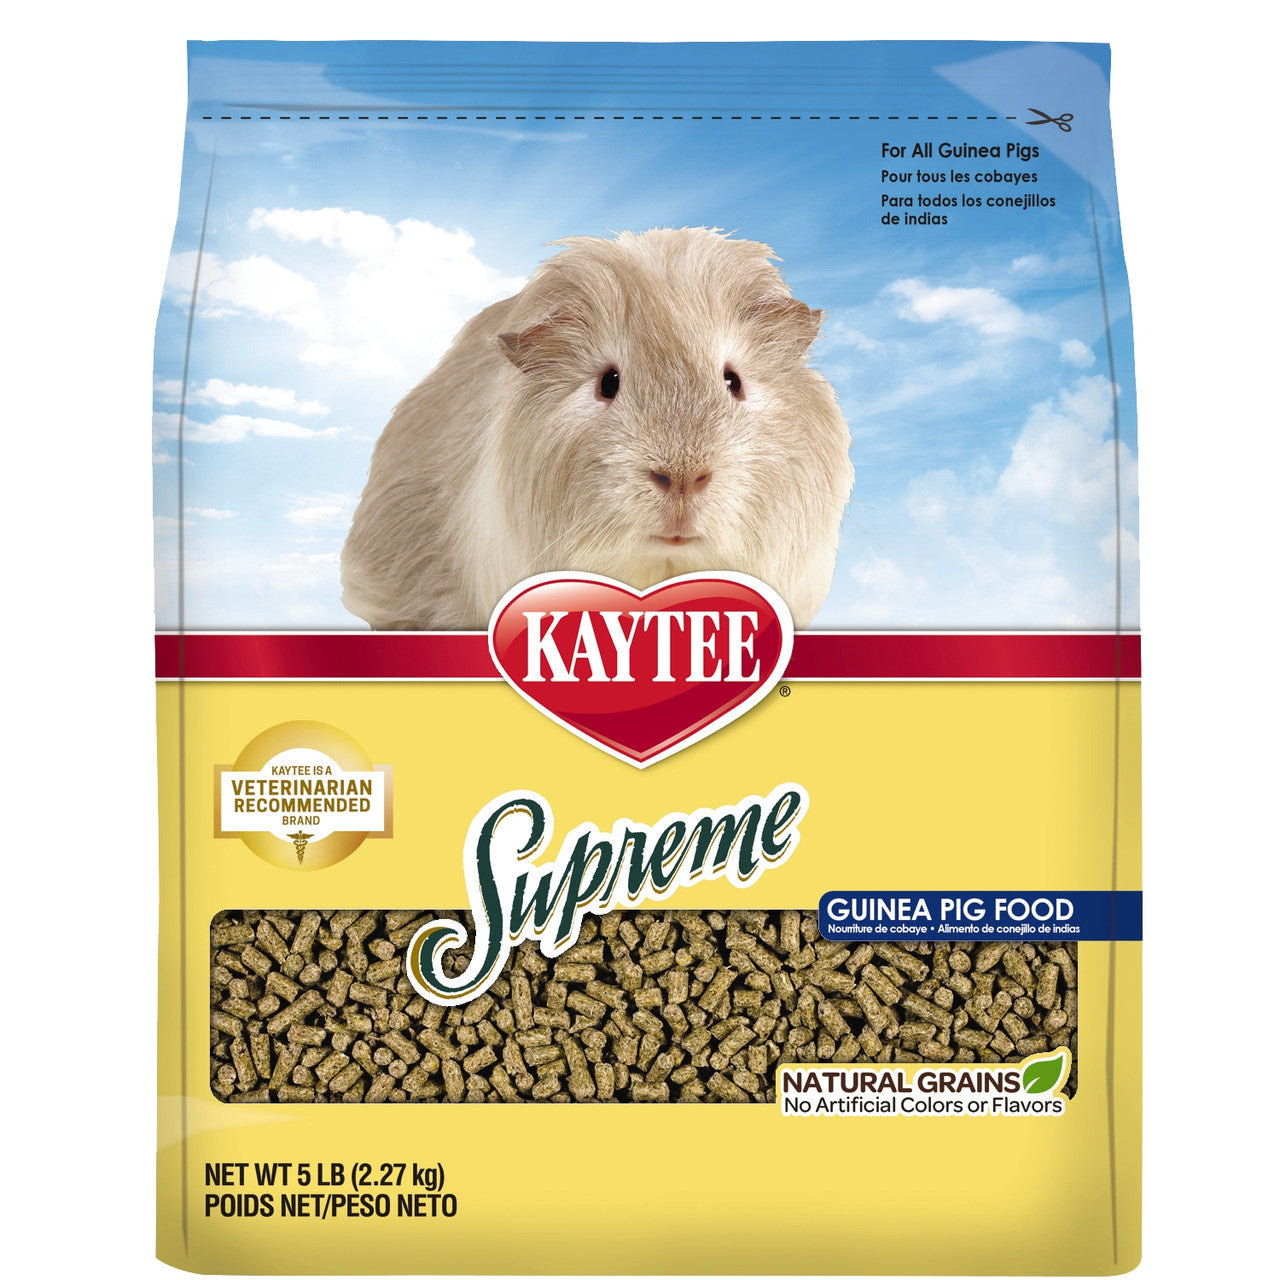 Kaytee Supreme Guinea Pig Food 5 lb